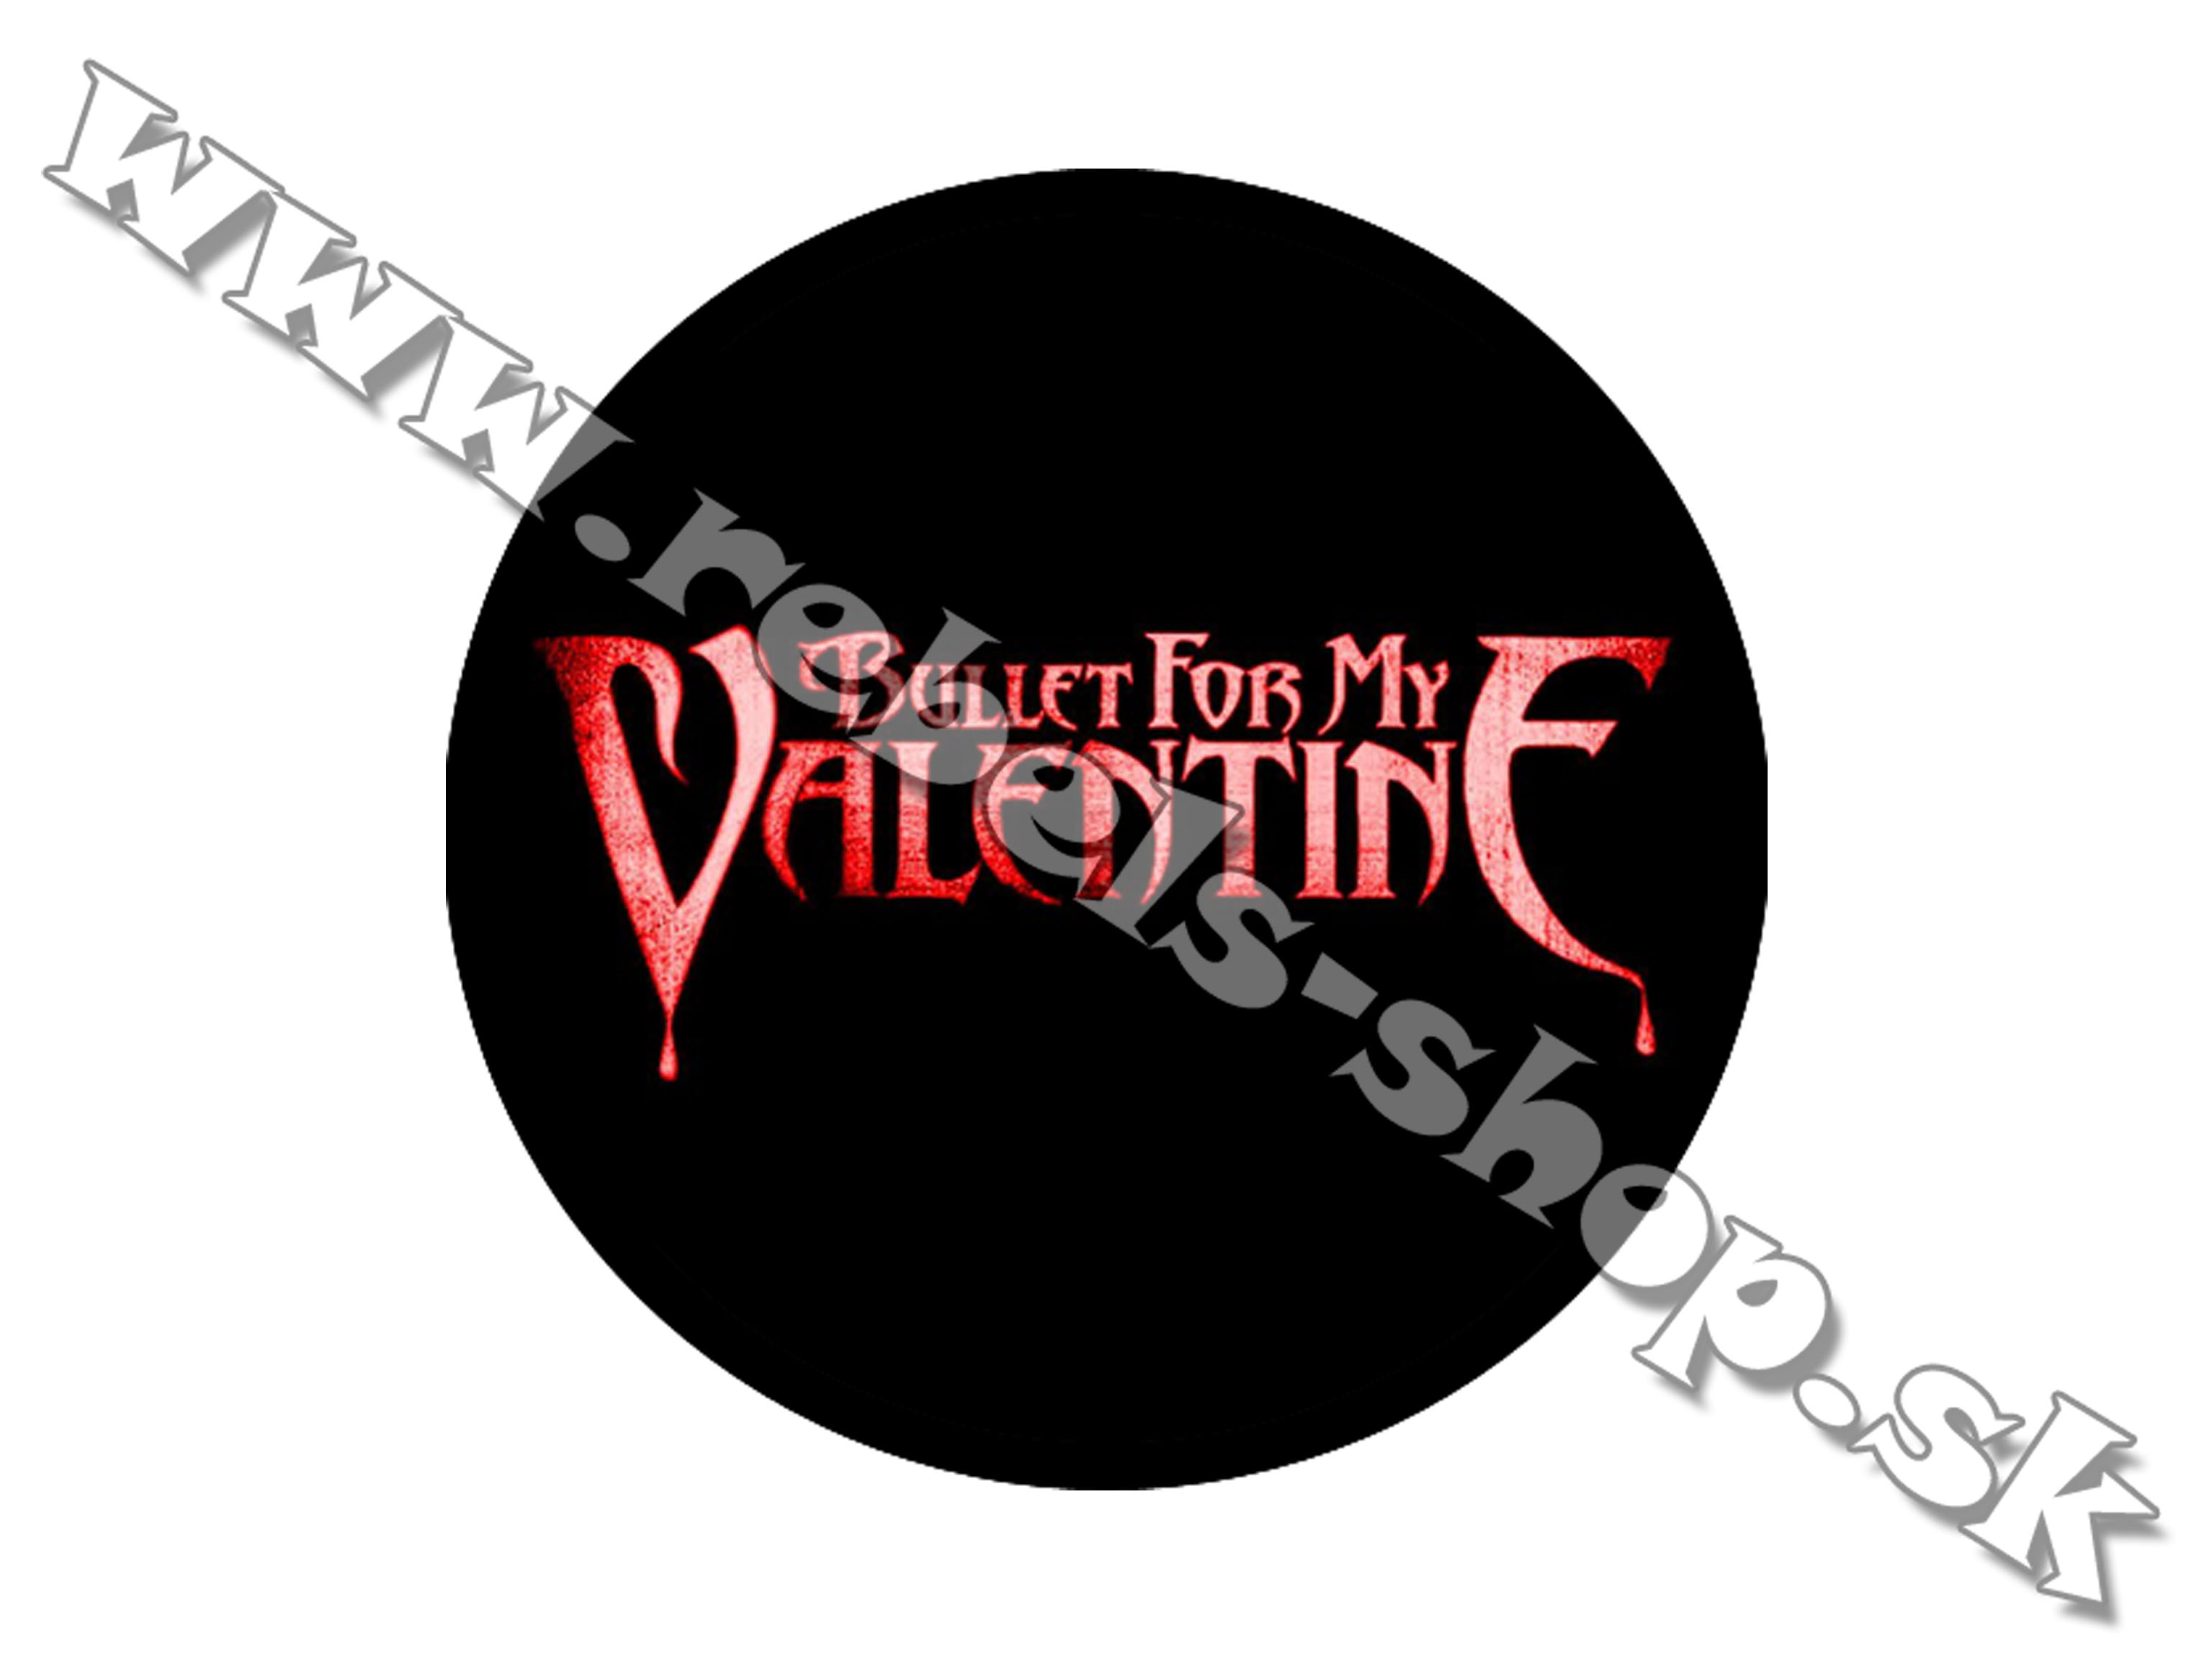 Odznak "Bullet For My Valentine"